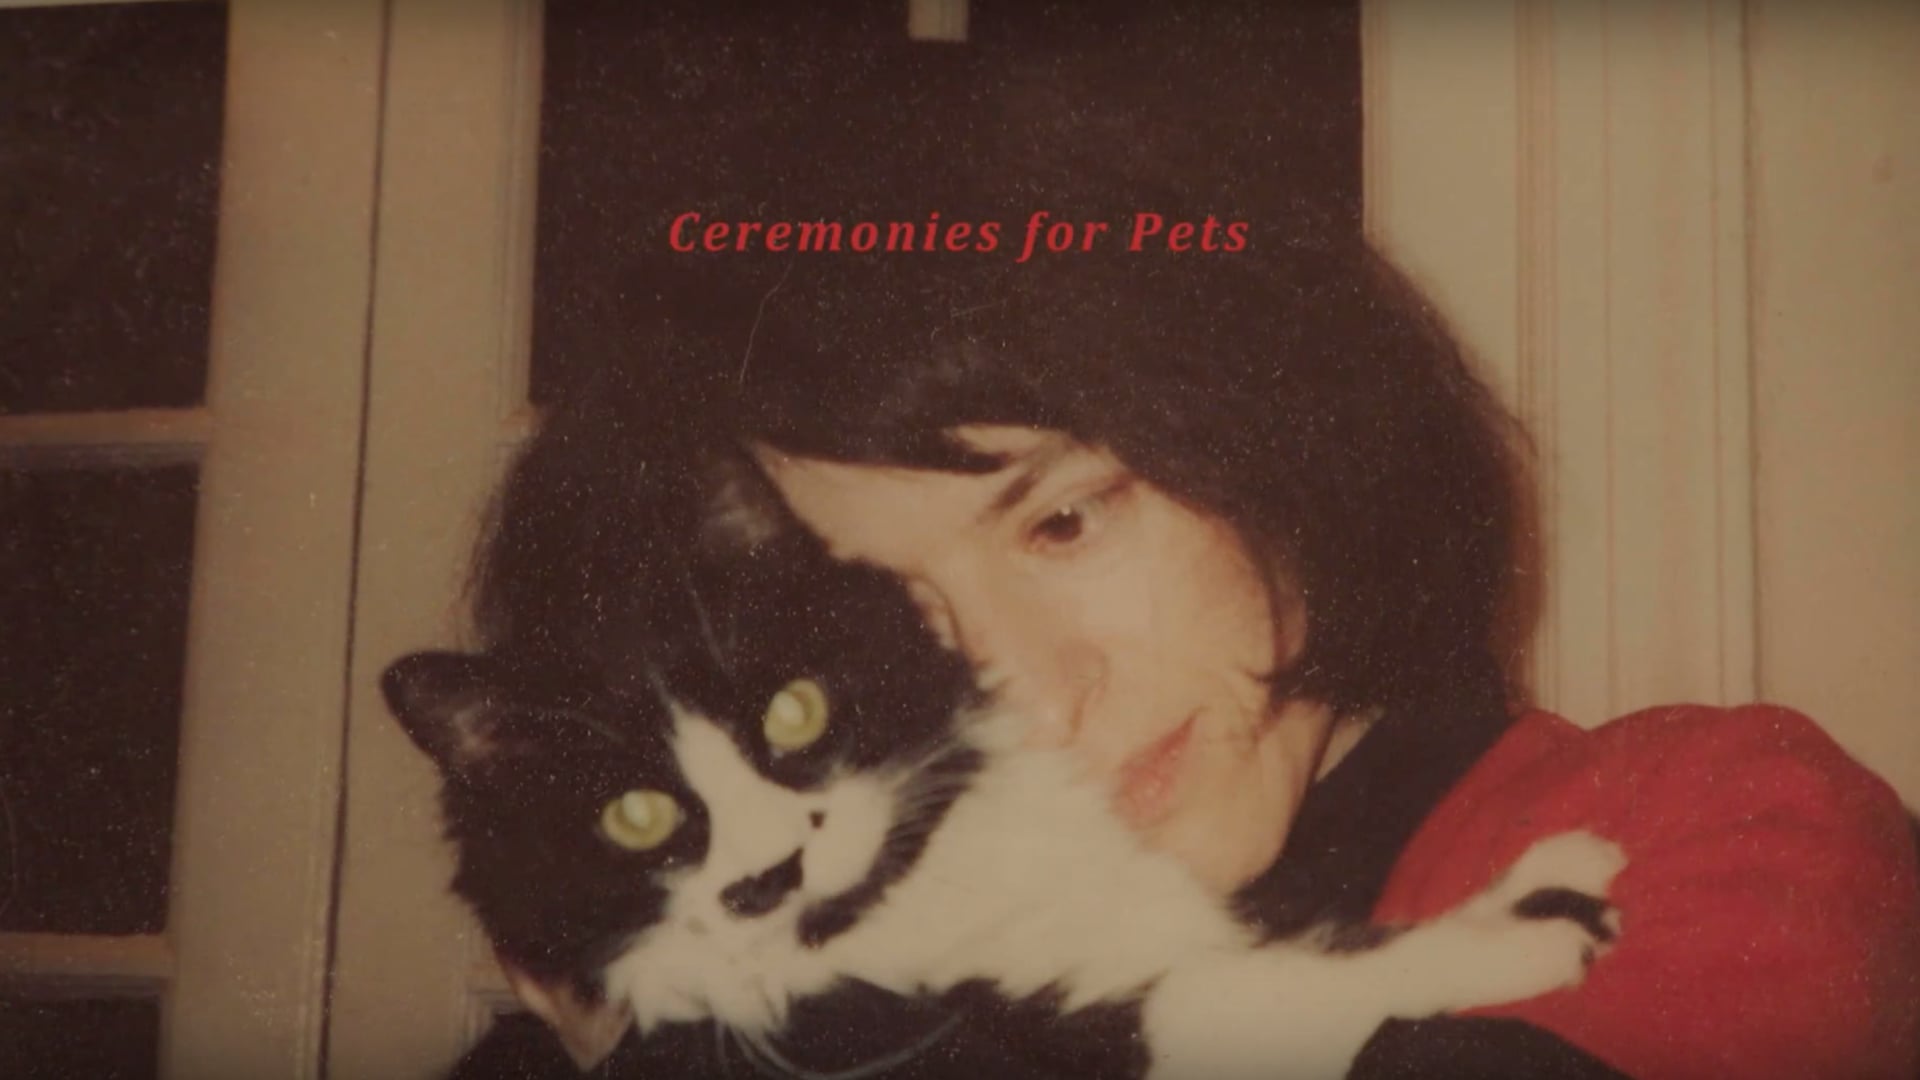 Ceremonies for Pets